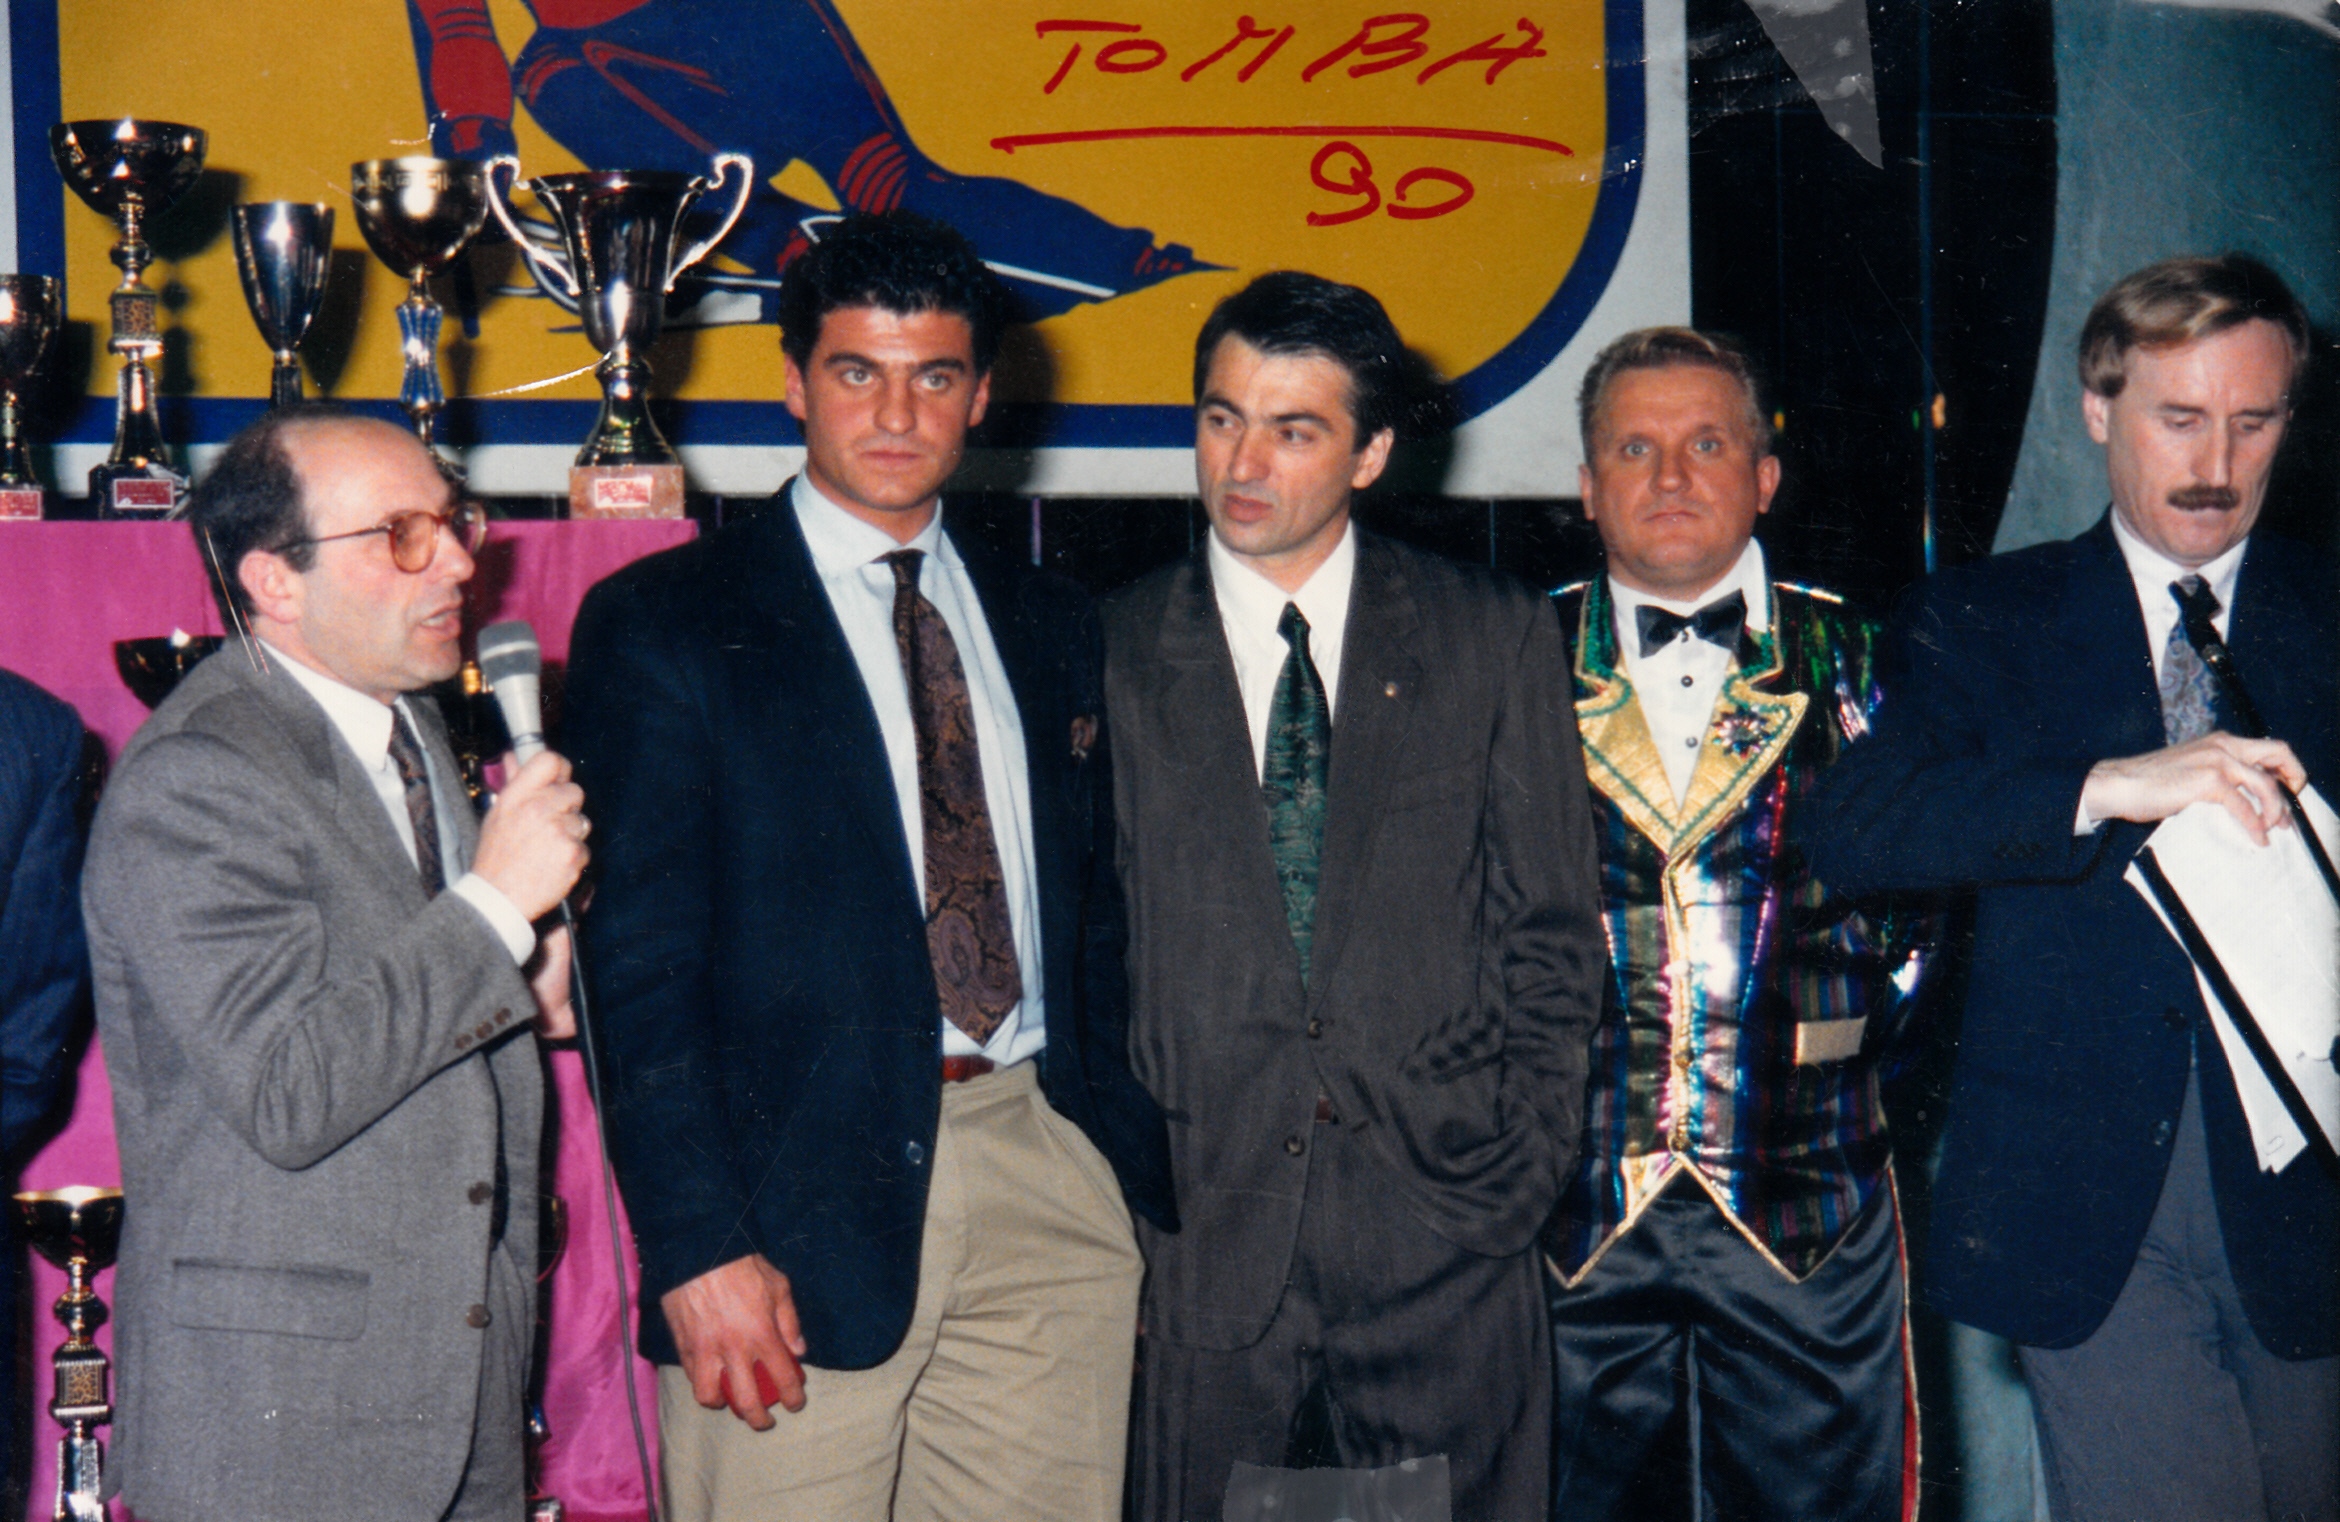 1990 Festa Luppi Sport 5 gent.conc.Livio Luppi